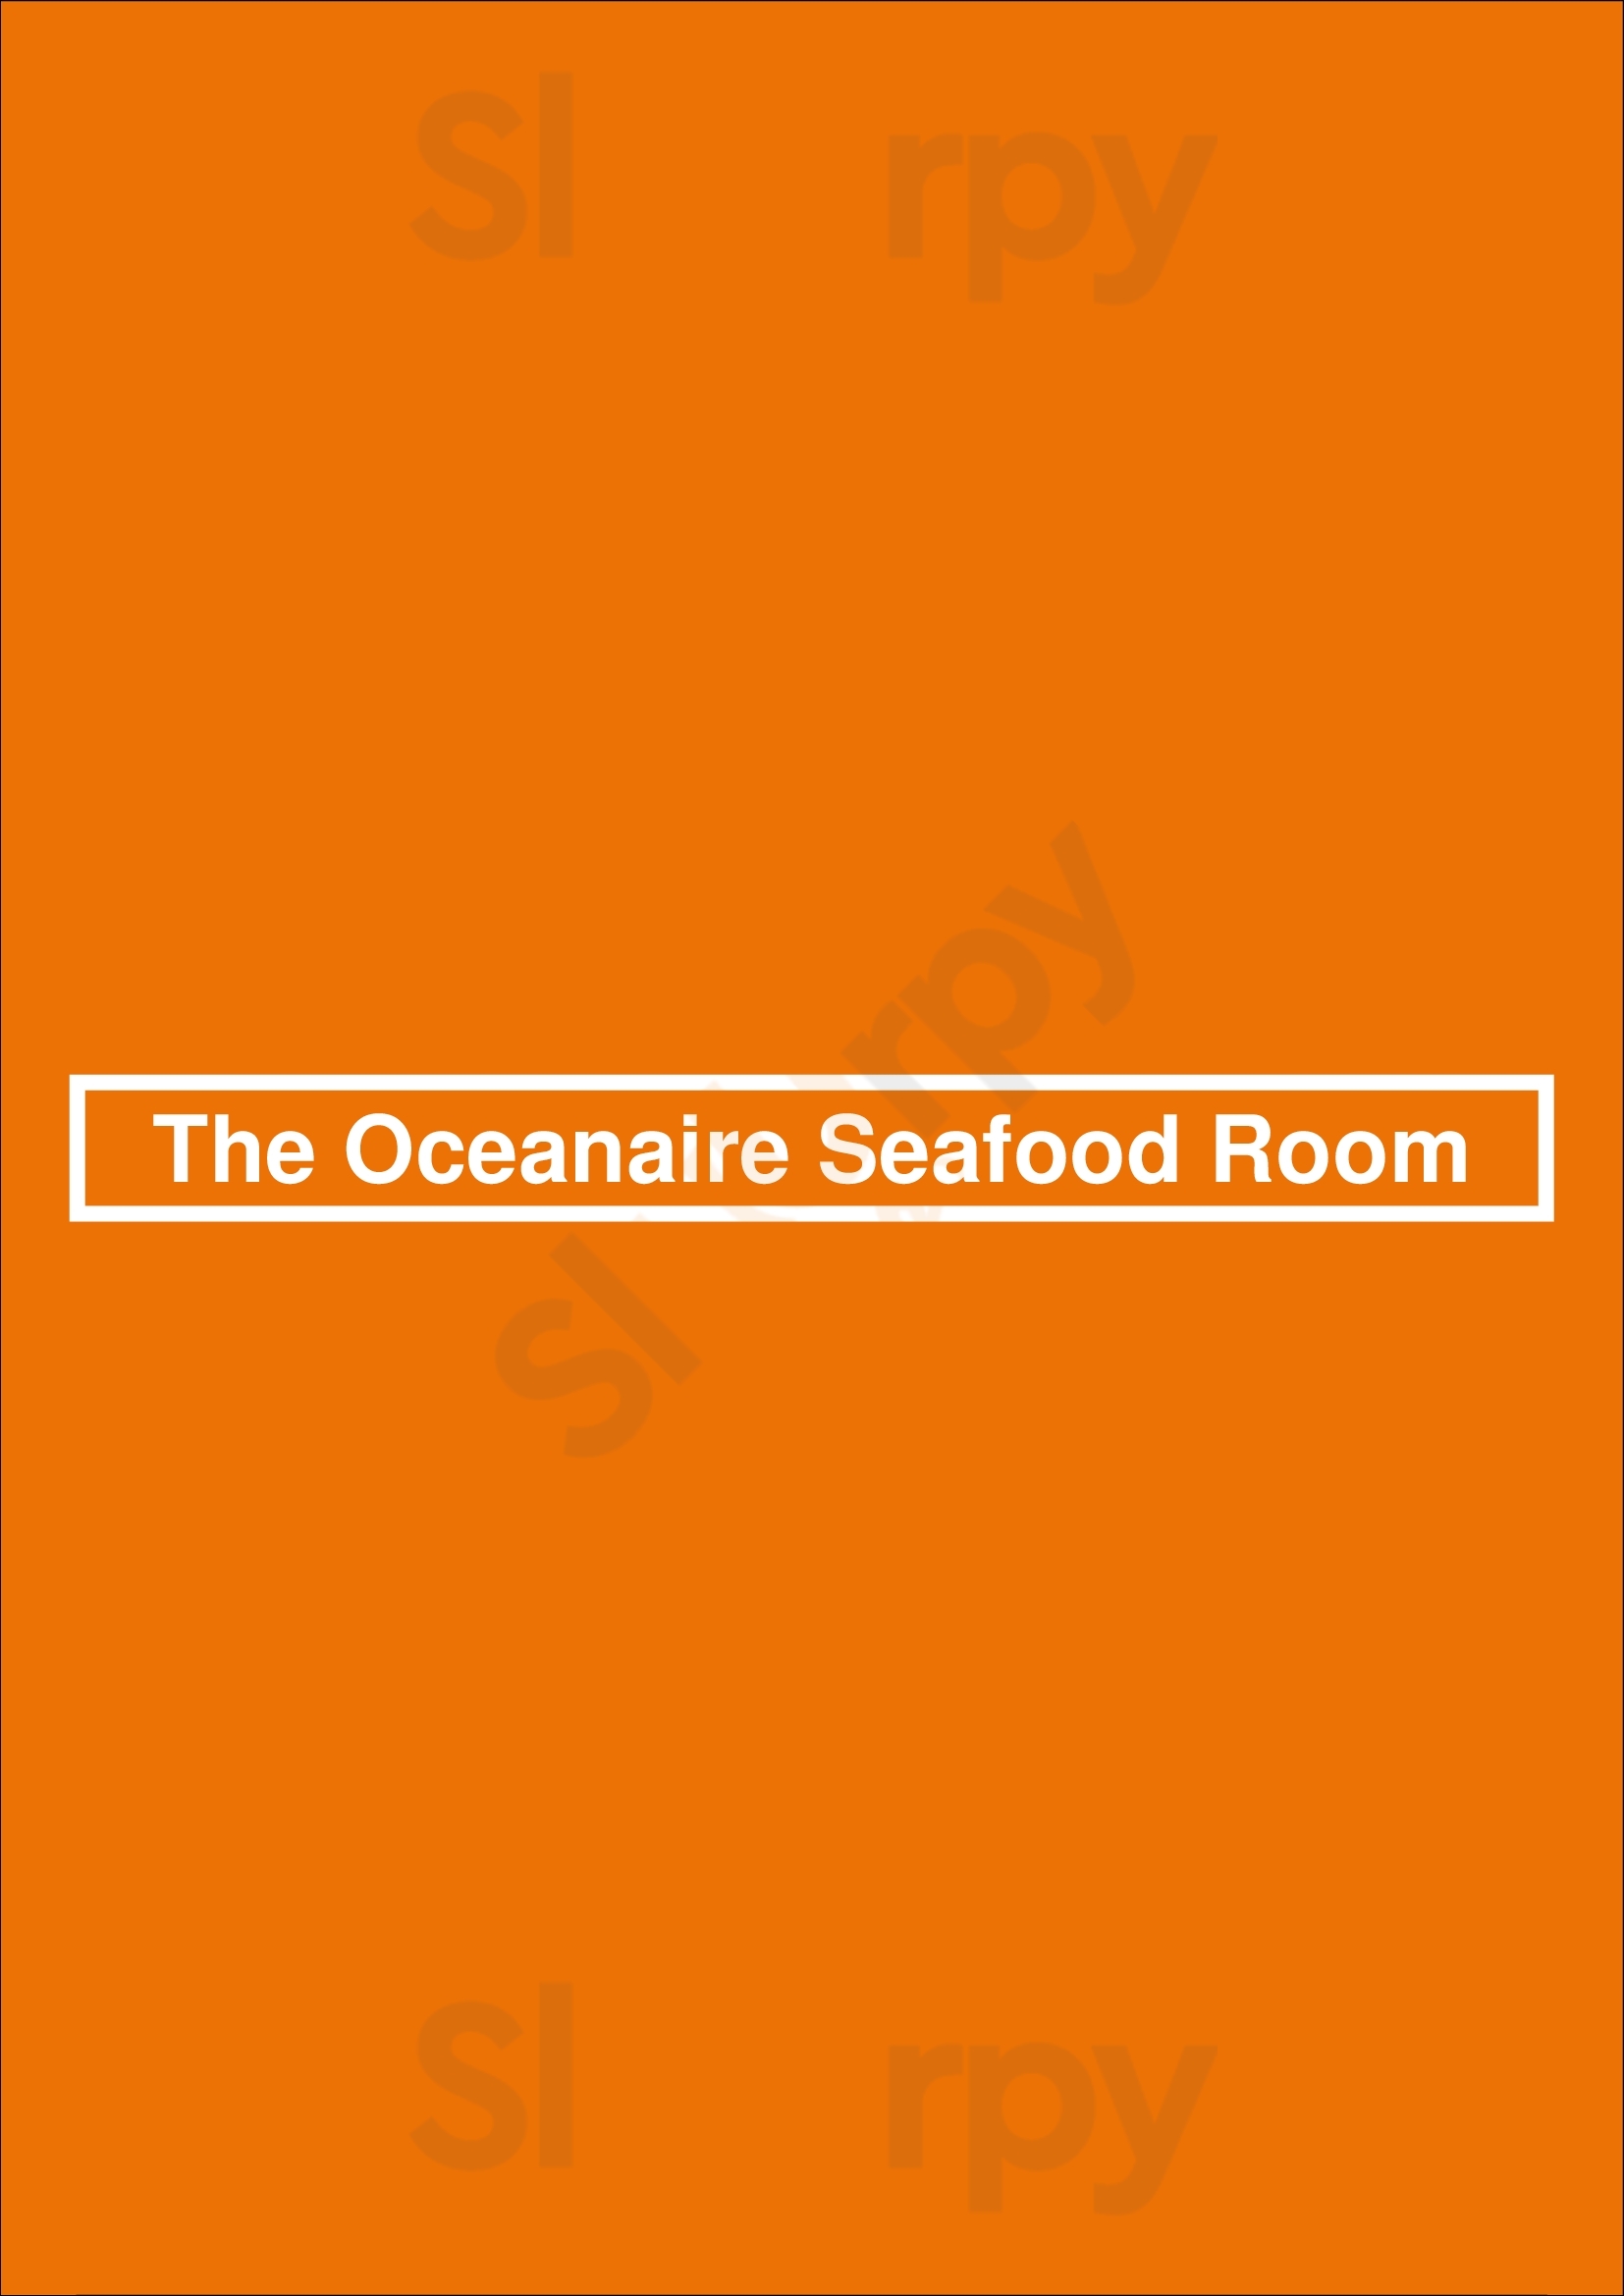 The Oceanaire Seafood Room Denver Menu - 1